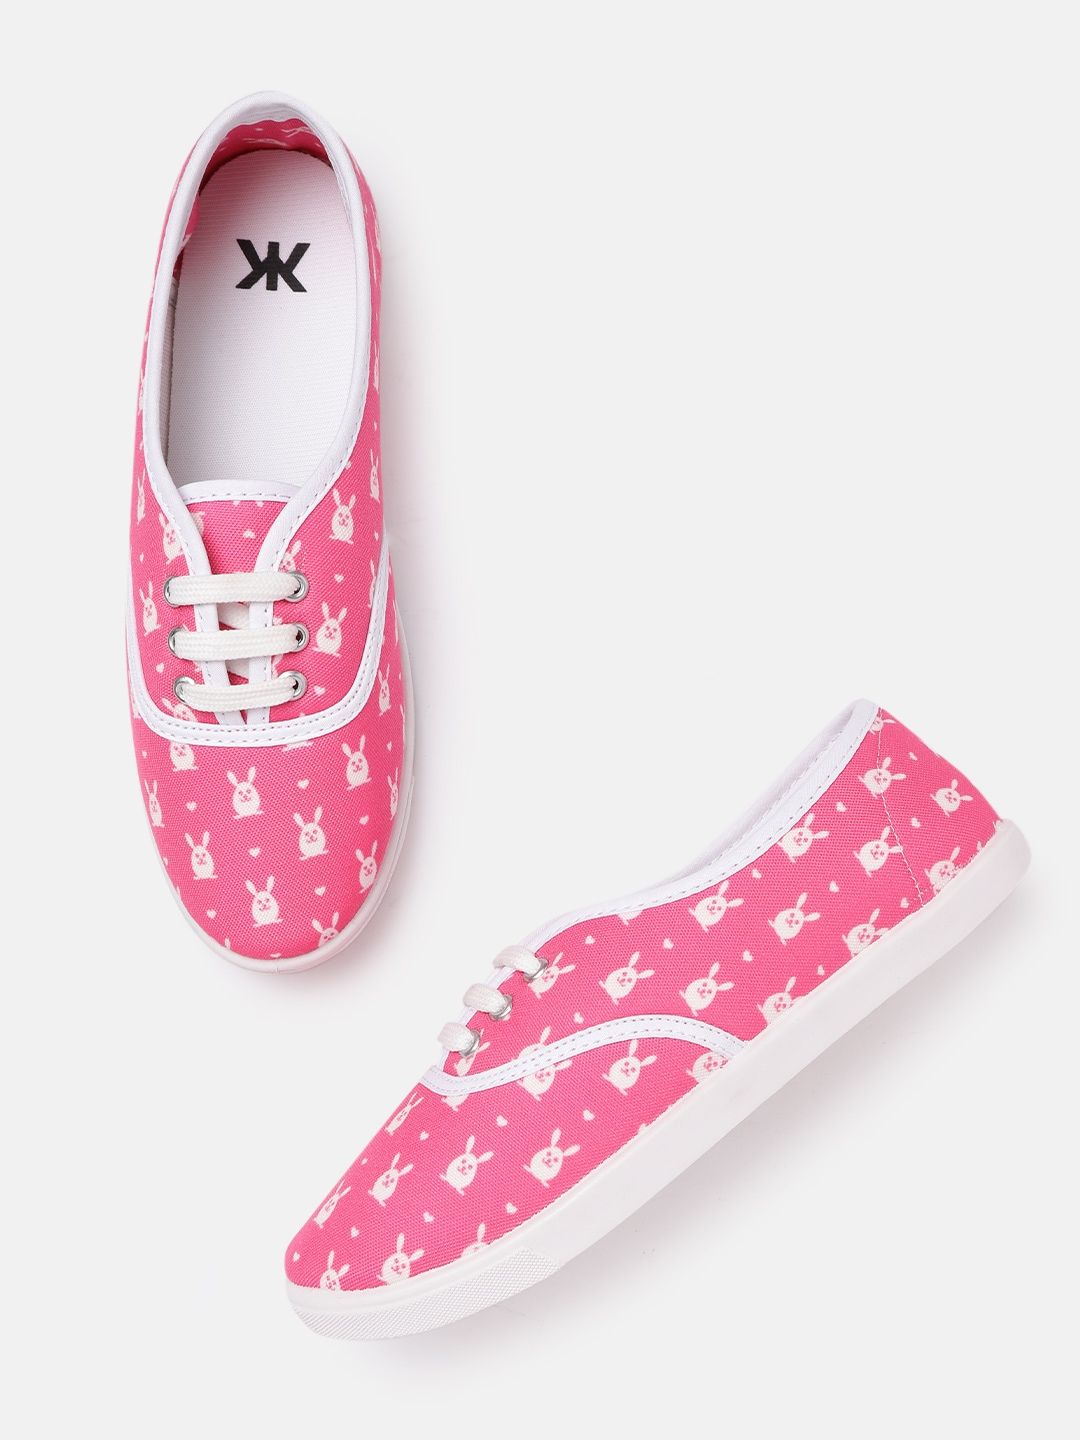 Kook N Keech Women Pink & White Bunny & Heart Print Sneakers Price in India